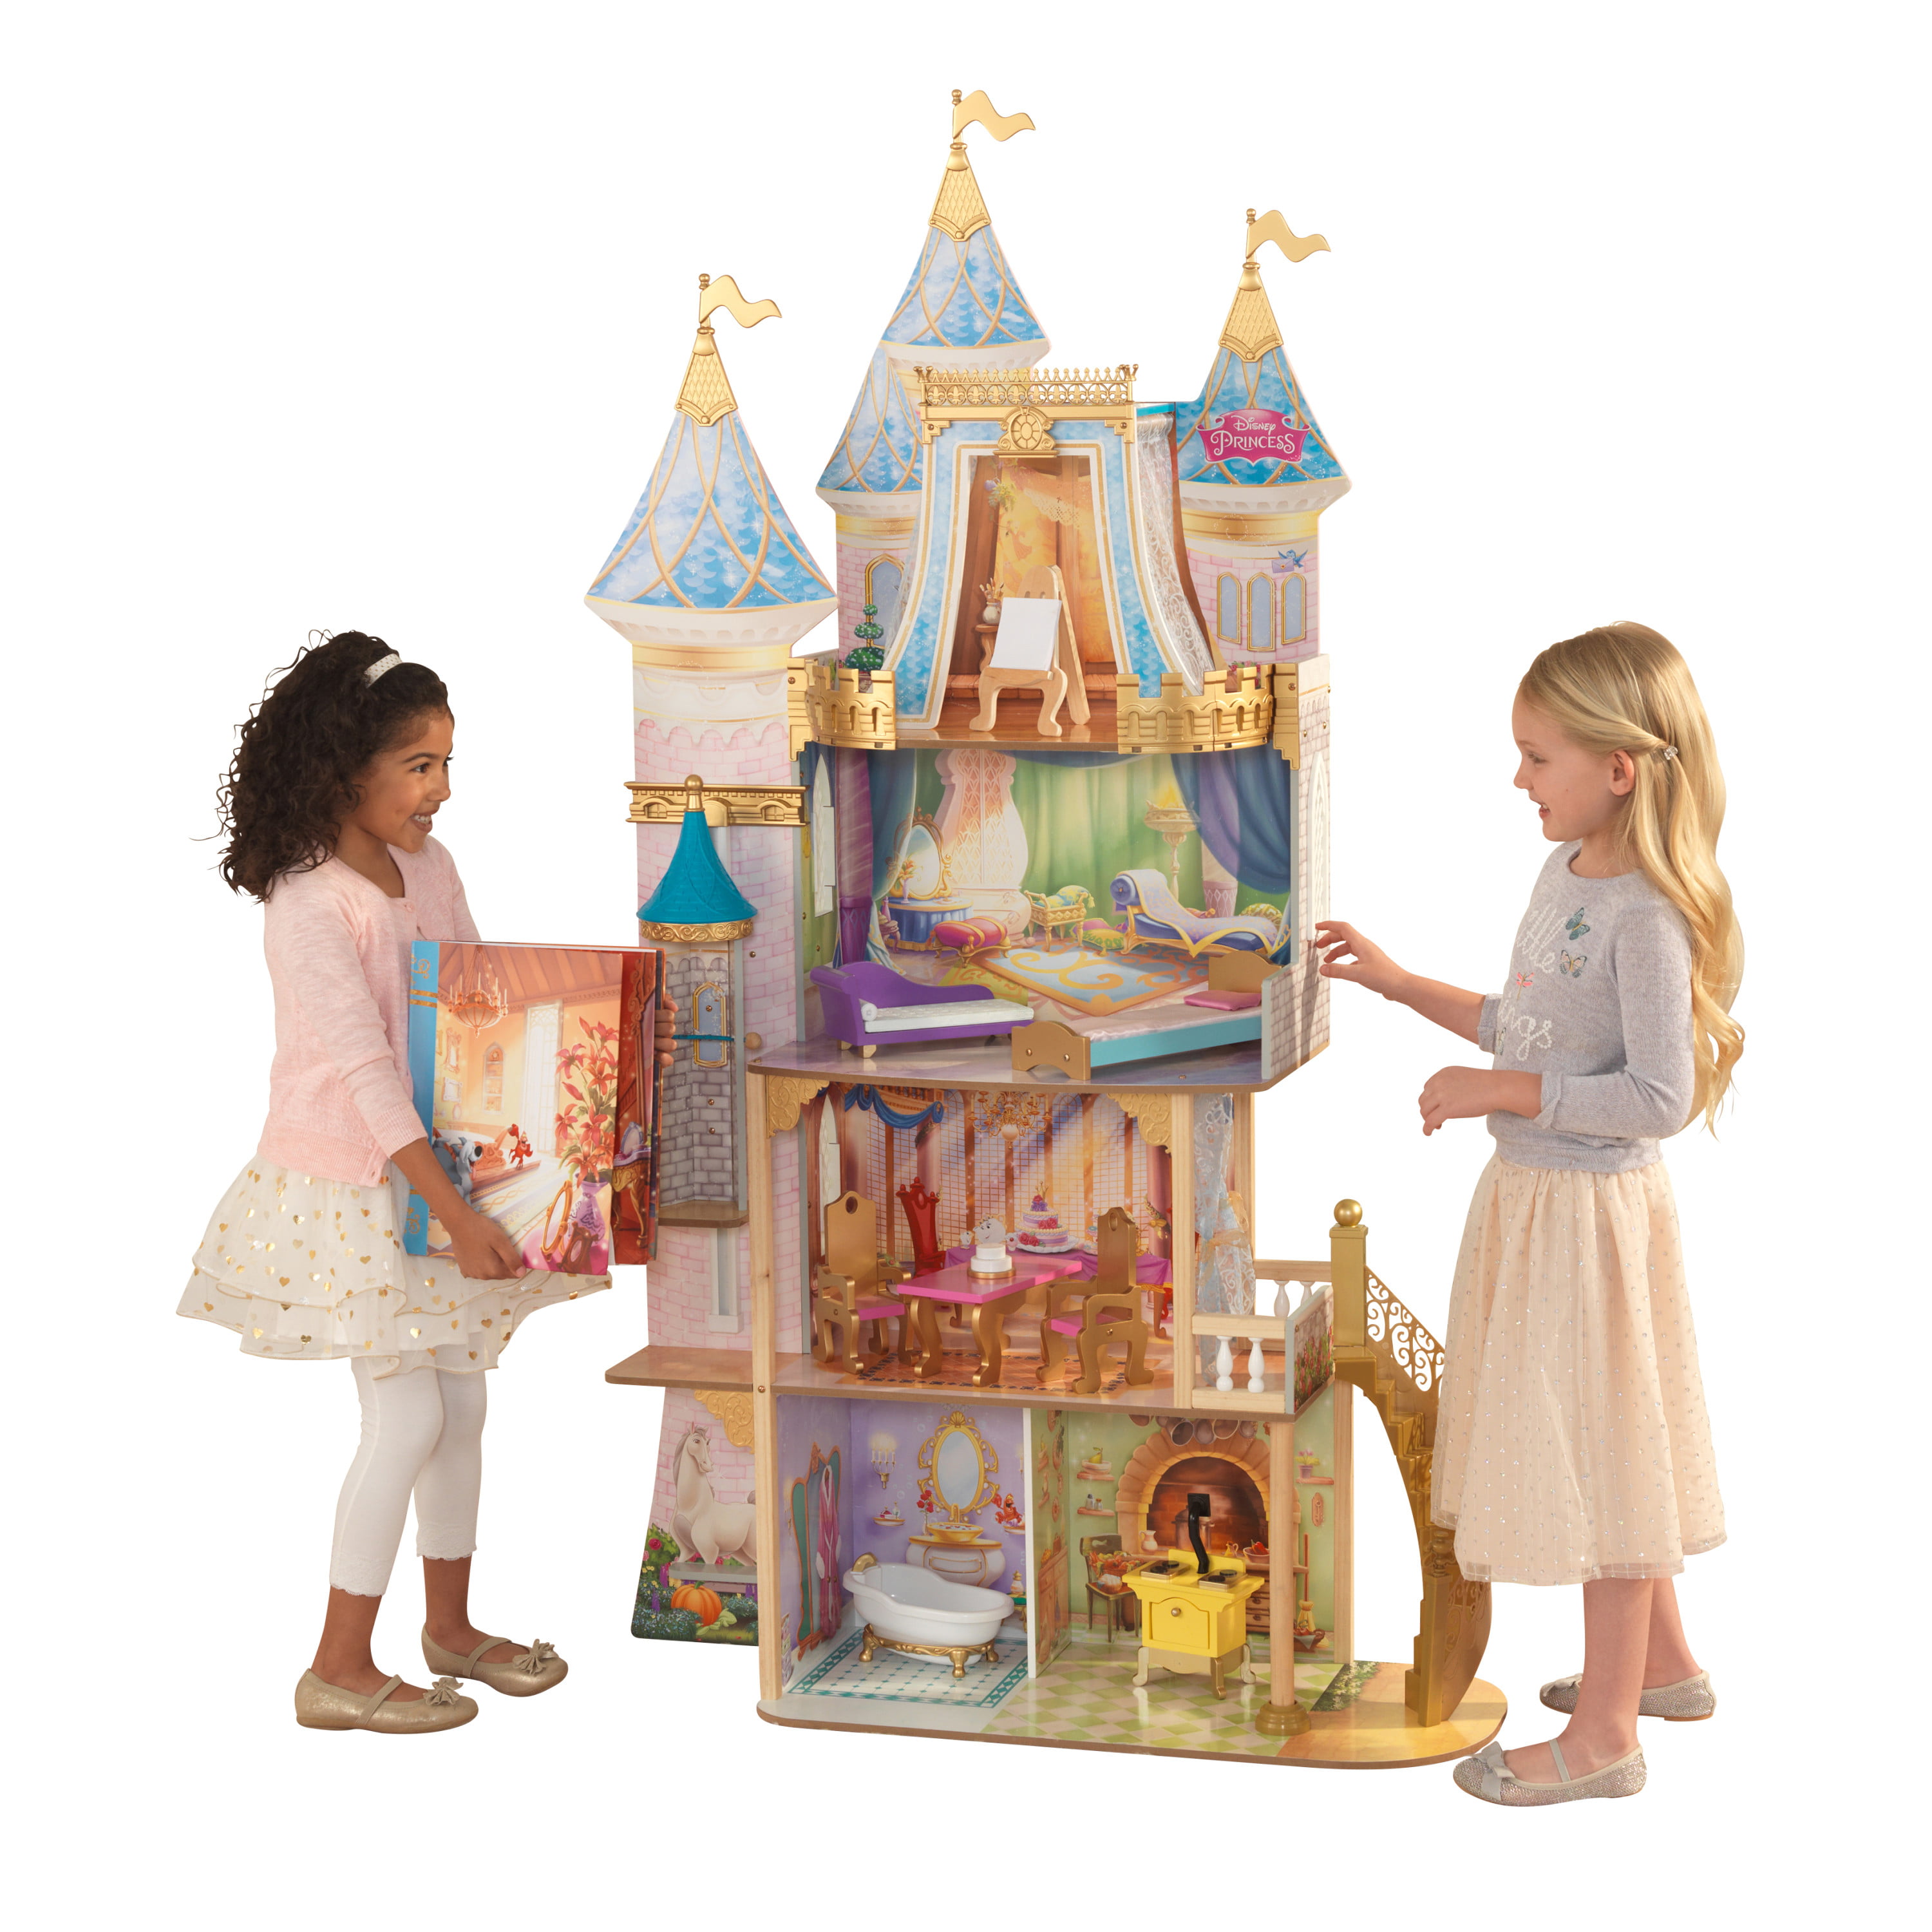 Disney Princess Cinderella Royal Dreams Dollhouse with Furniture by KidKraft NEW 